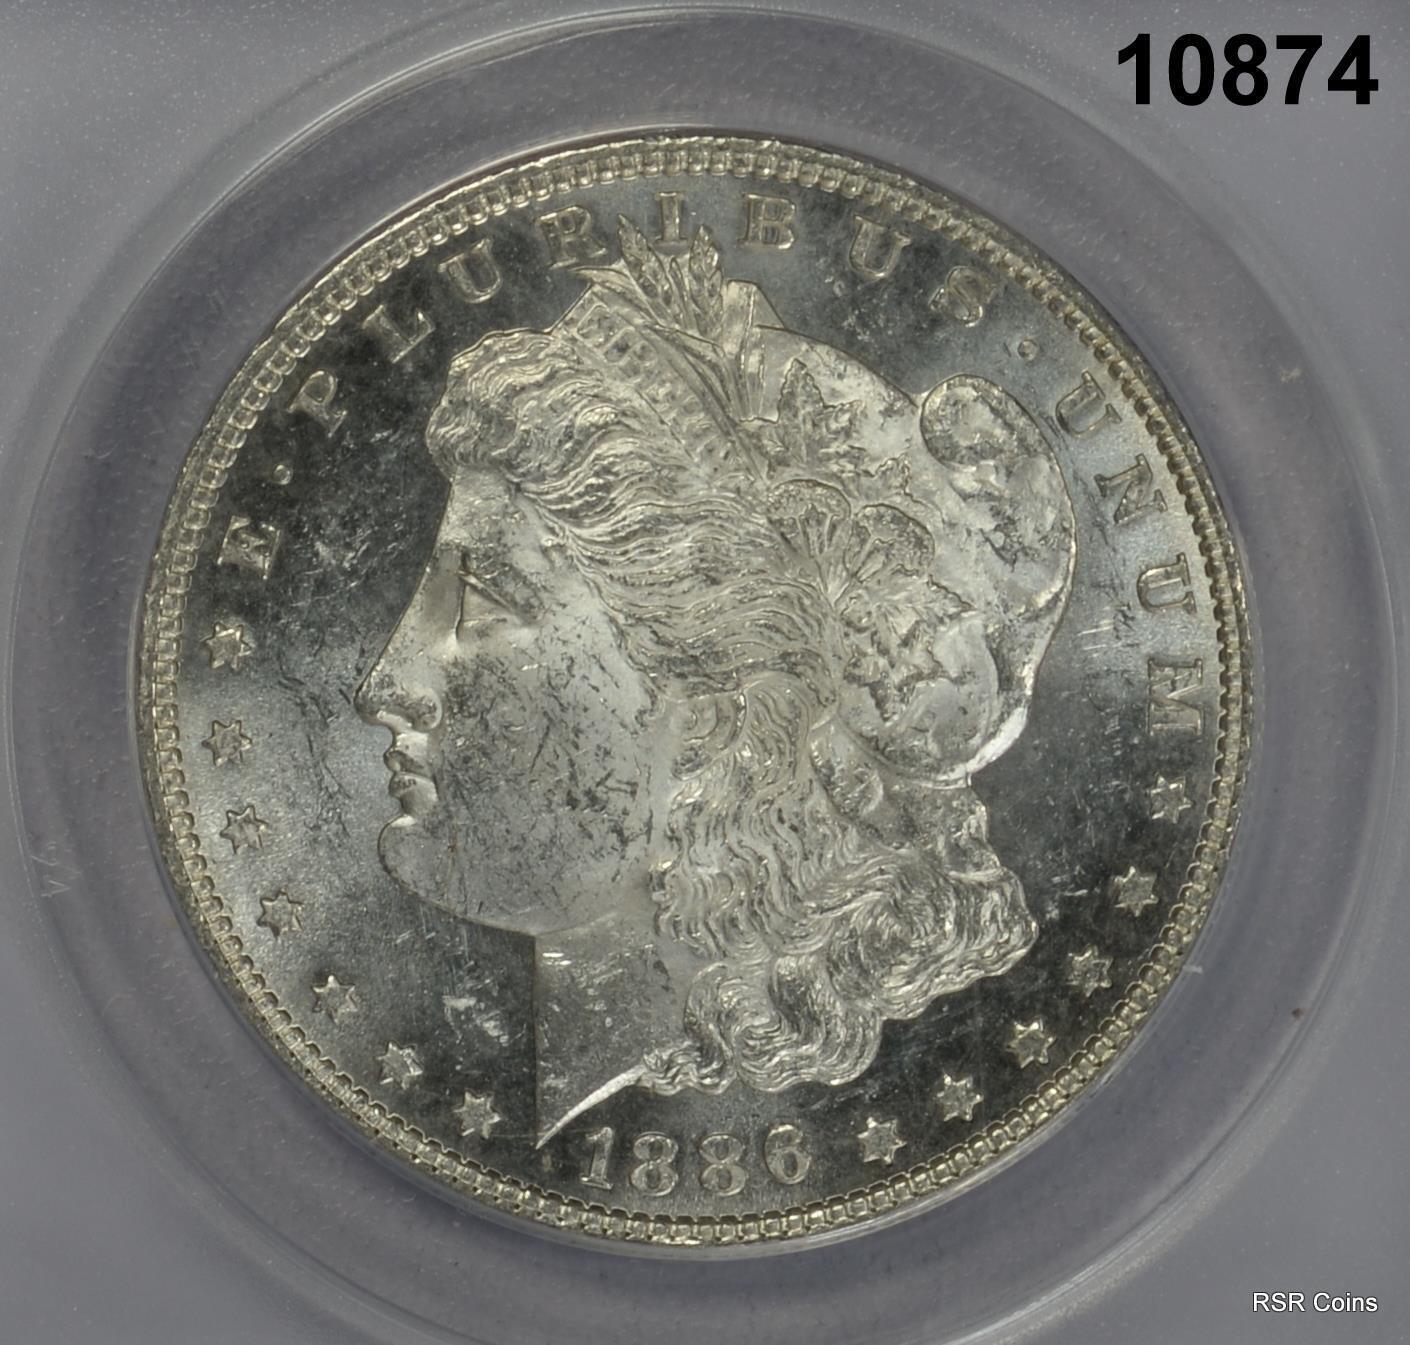 1886 MORGAN SILVER DOLLAR ANACS CERTIFIED MS61 #10874